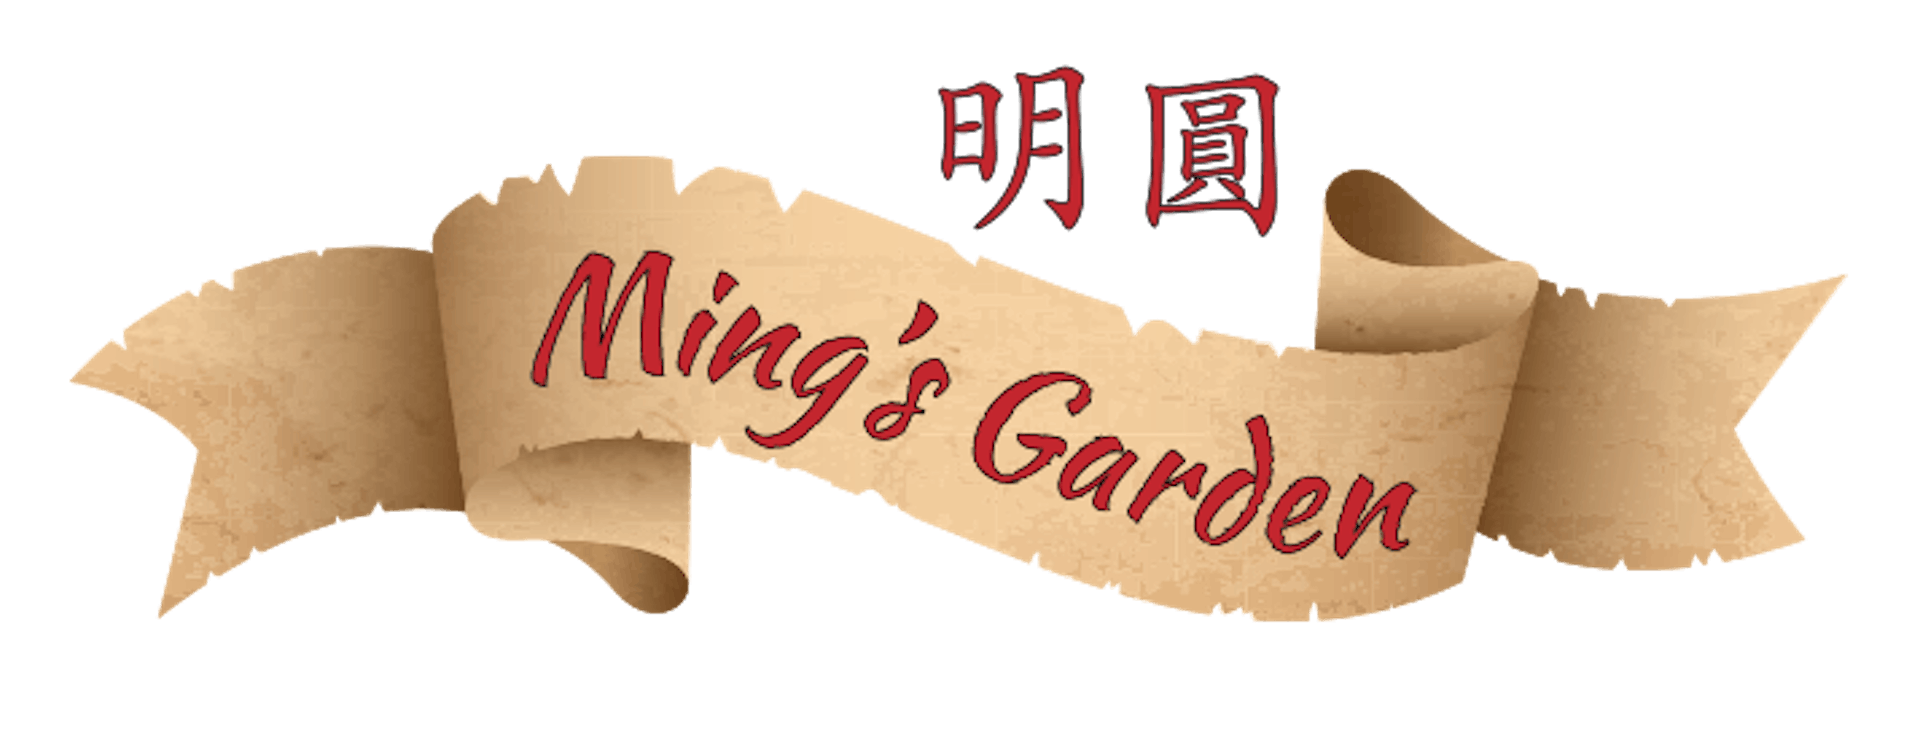 Ming S Garden Montgomery Al 36117 Menu Order Online